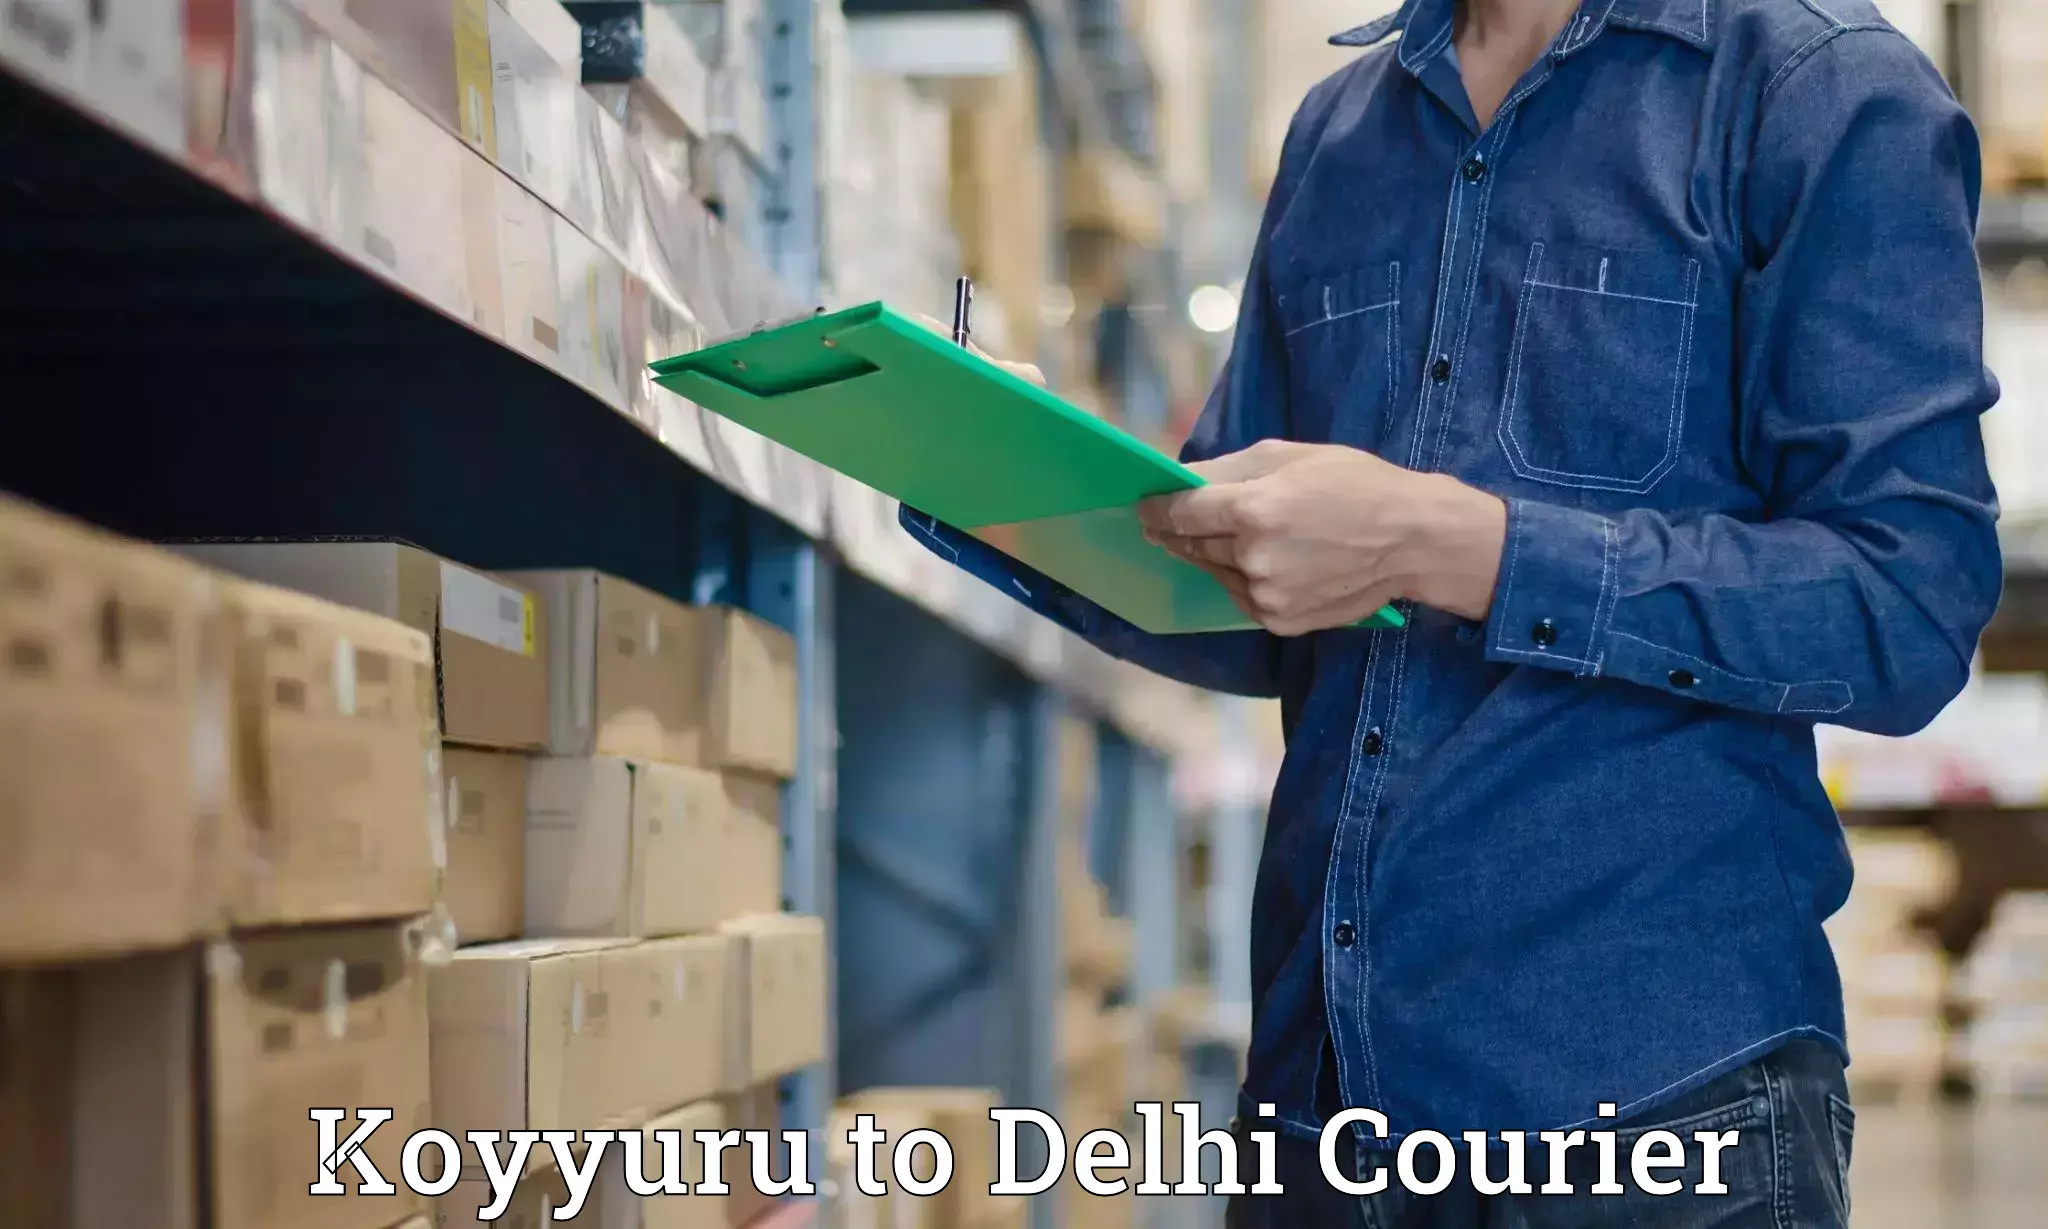 Business delivery service in Koyyuru to Delhi